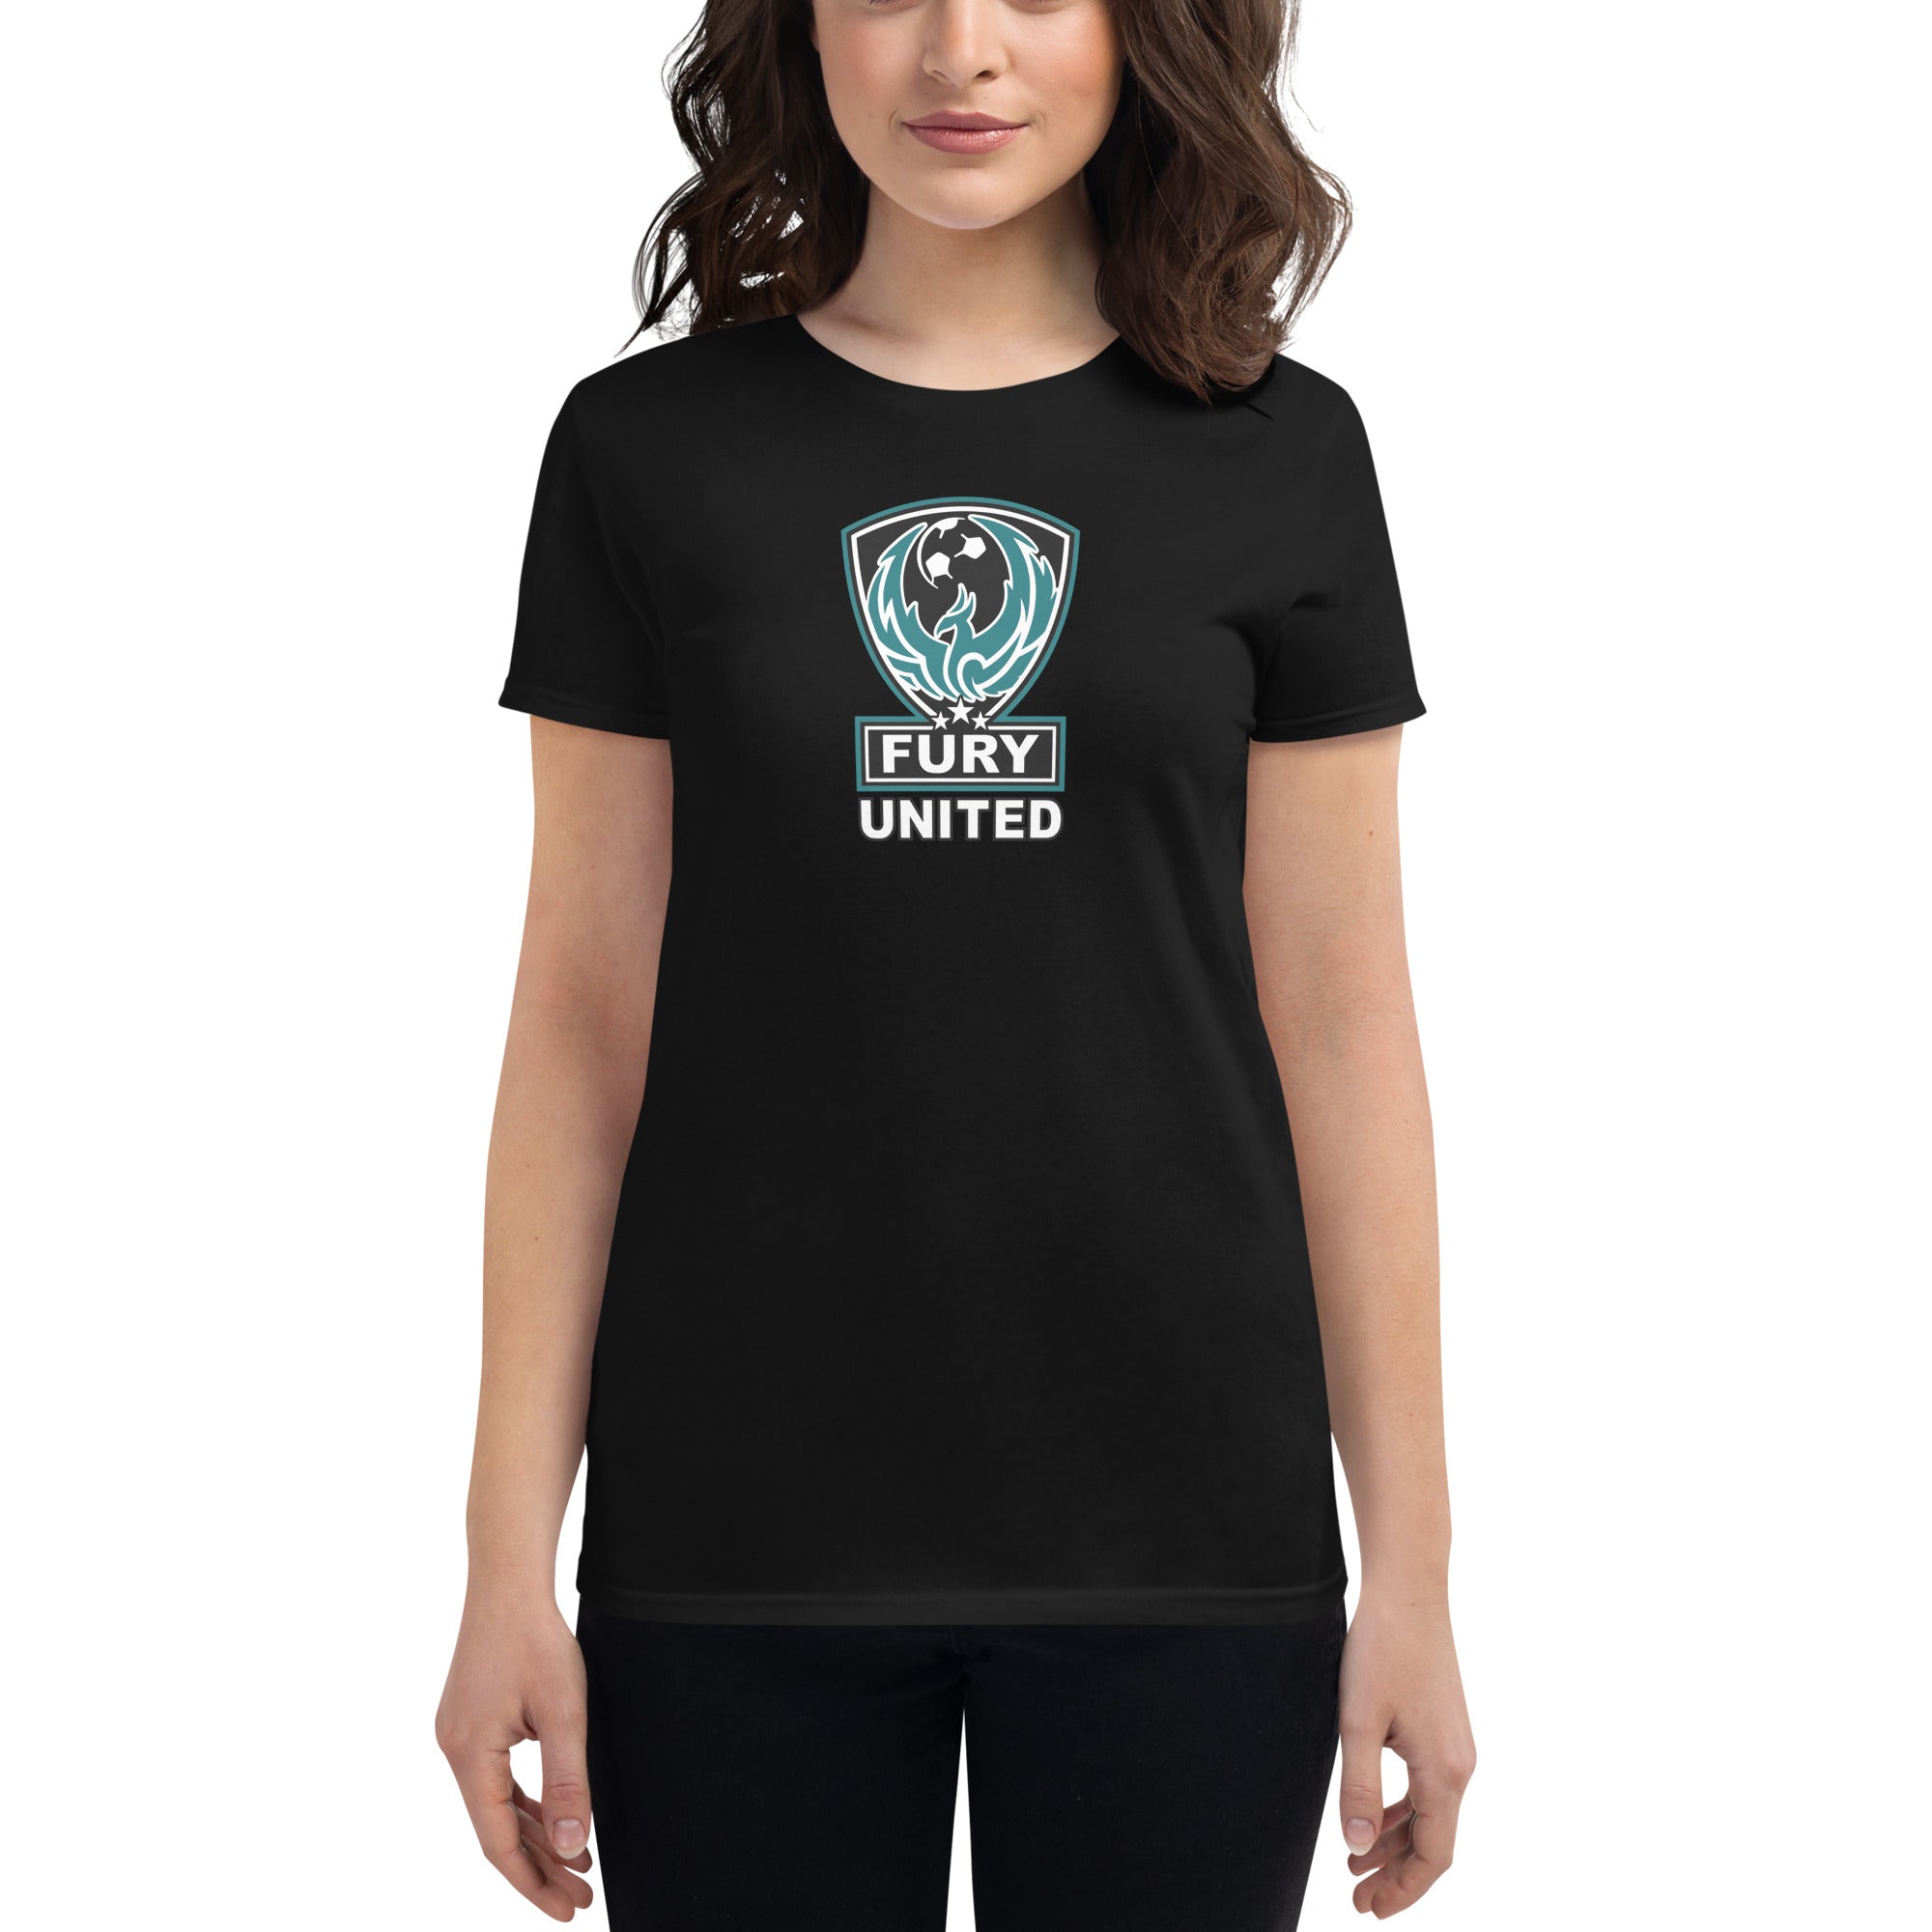 Fury United Women's Fashion Fit T-Shirt